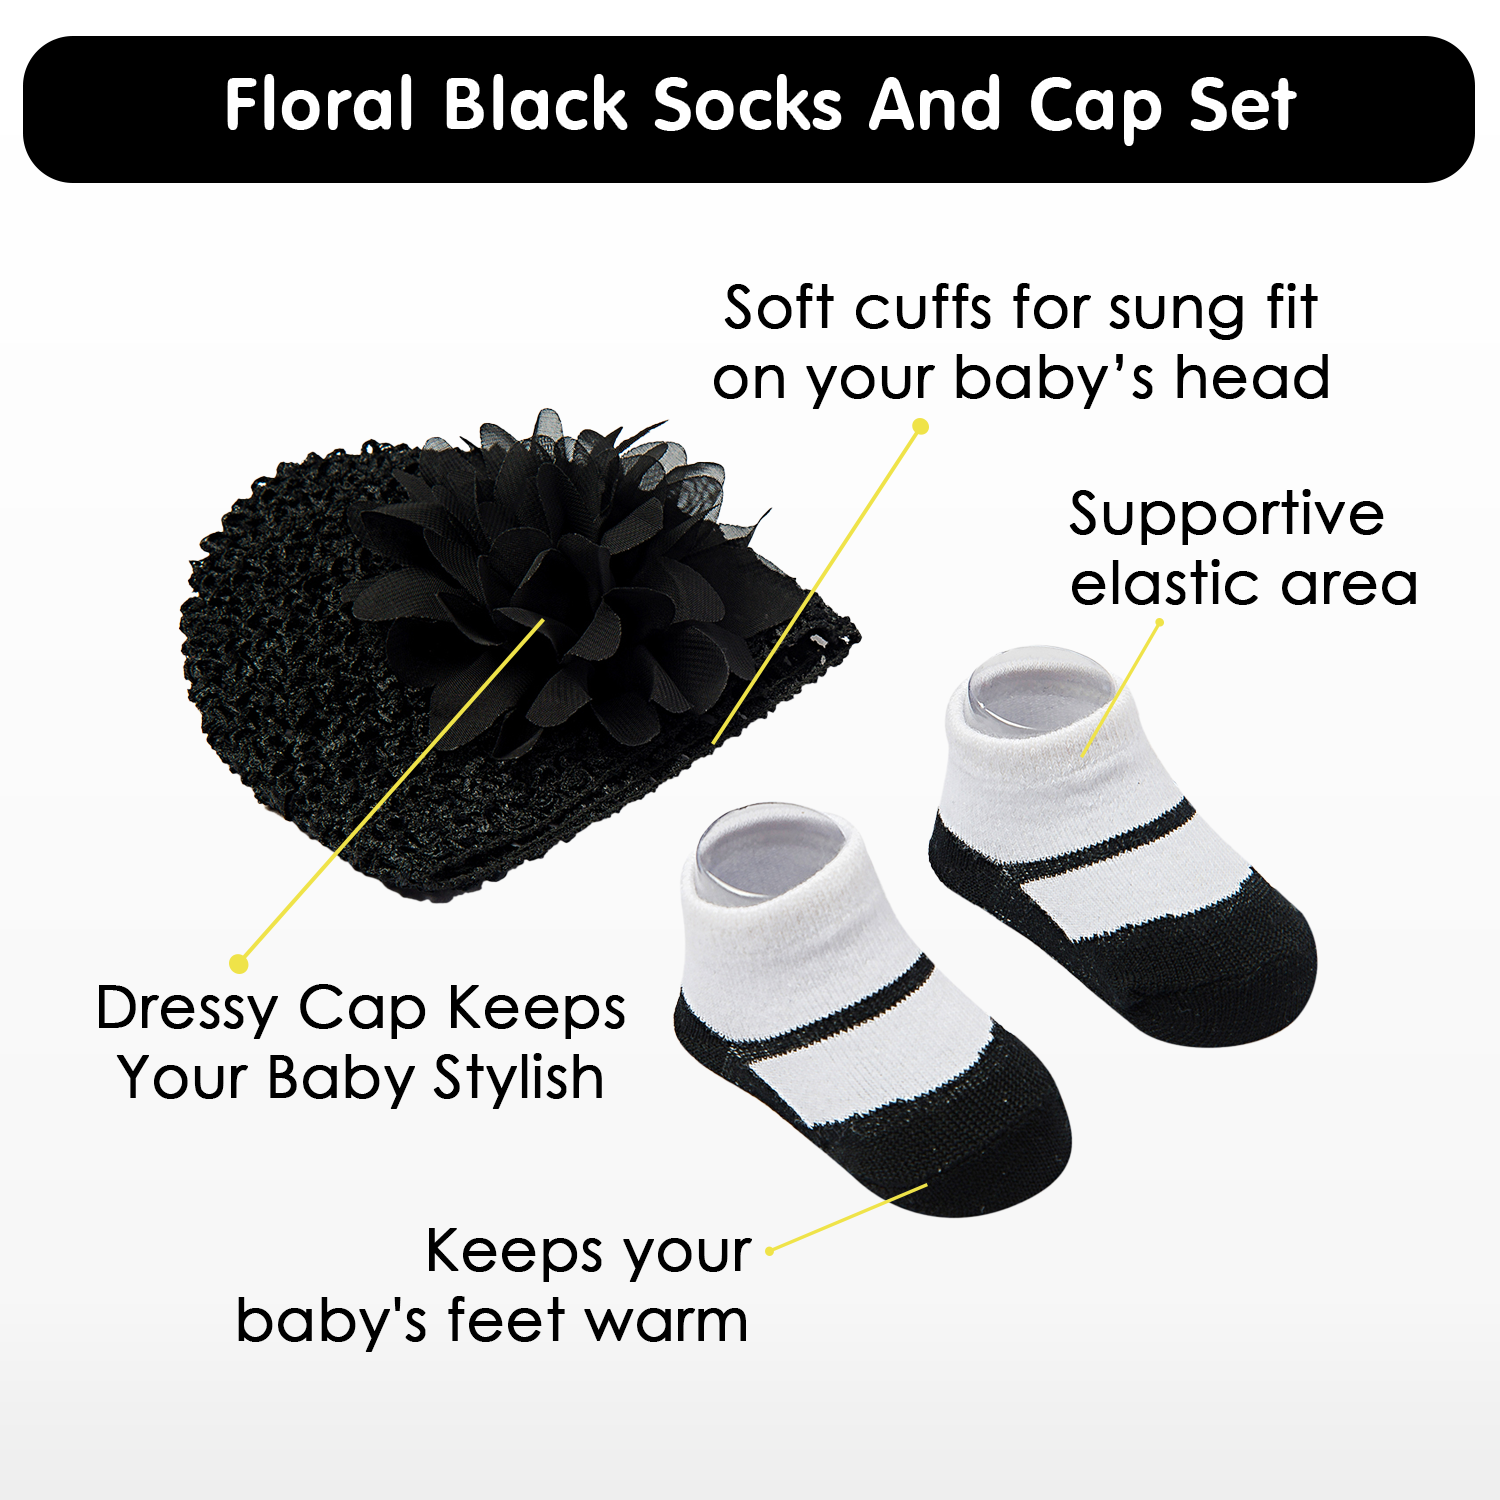 Floral Black Socks And Cap Set